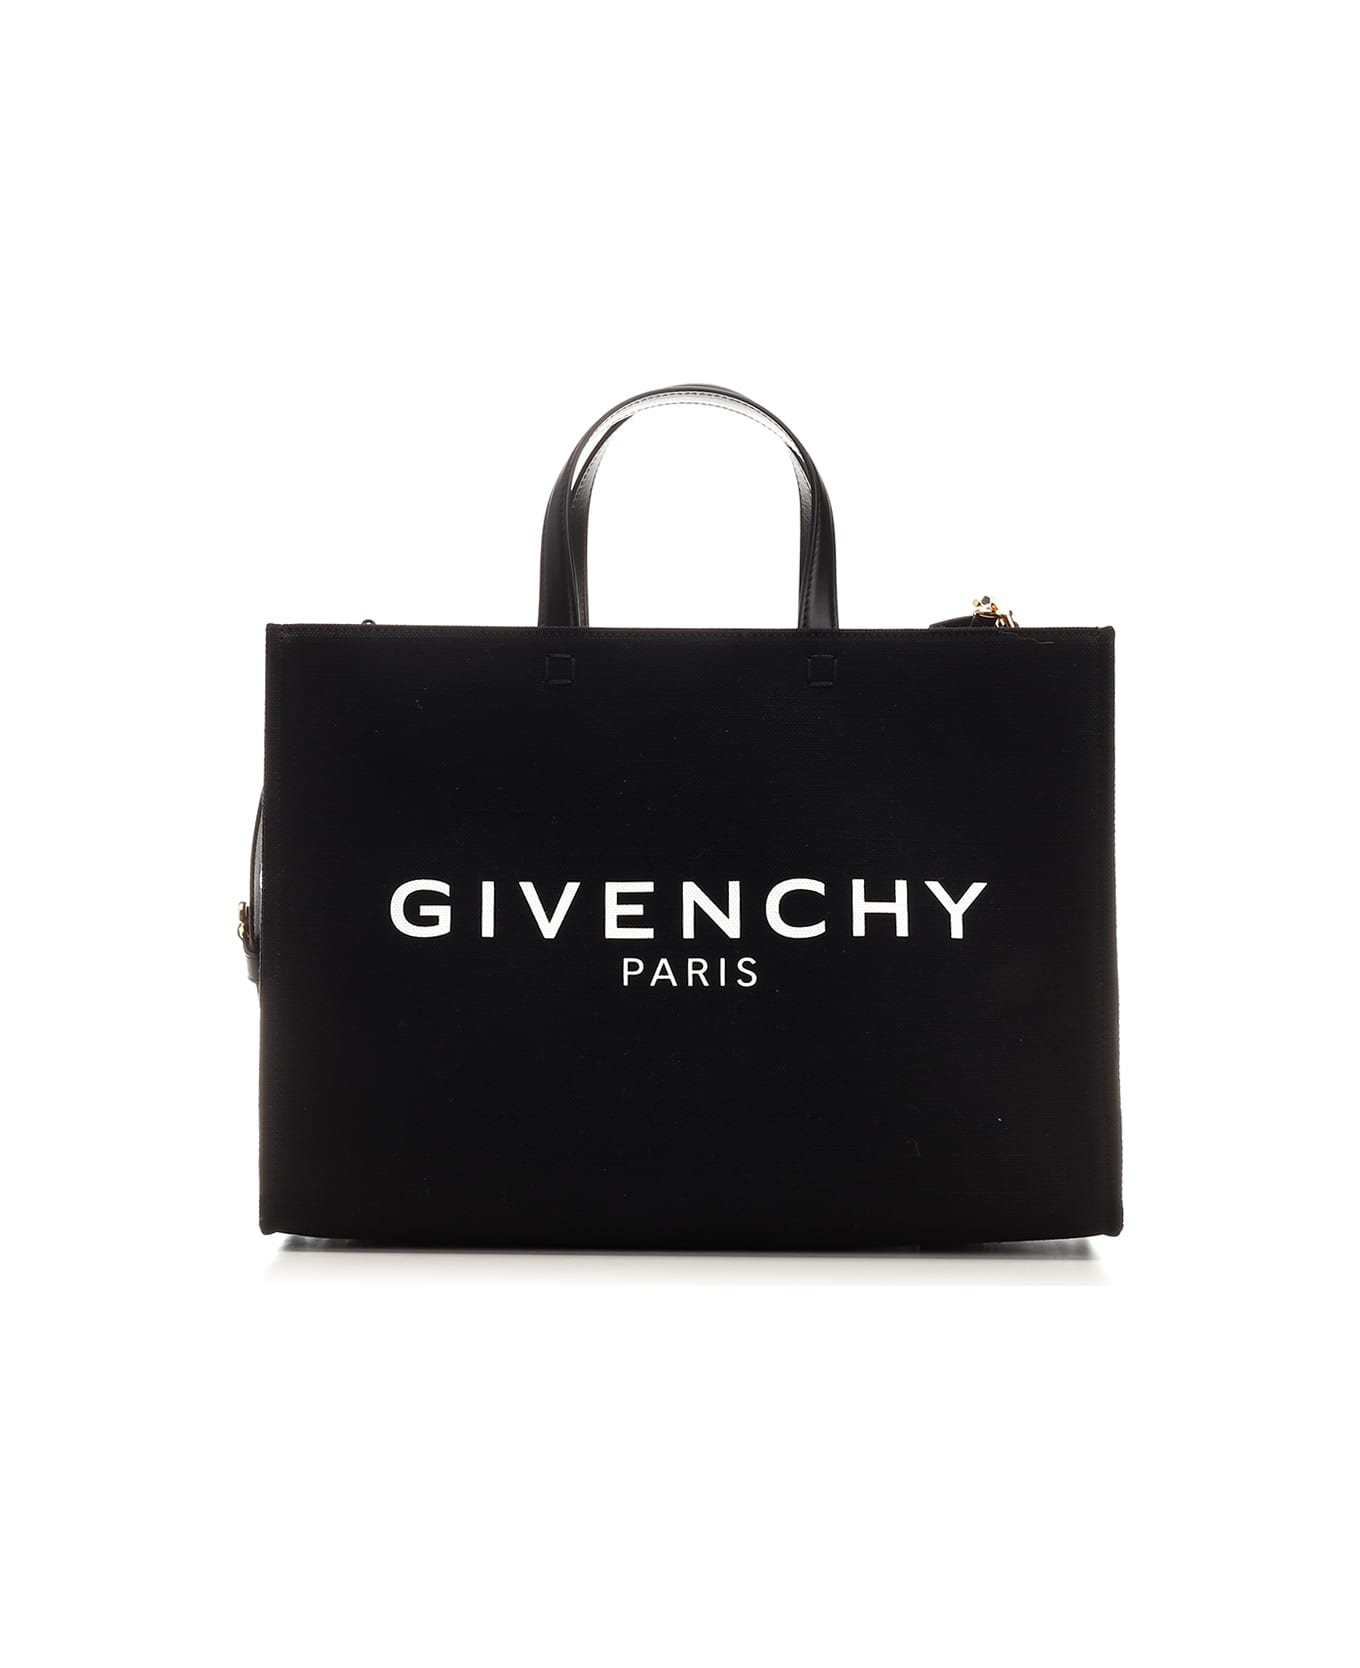 Givenchy 'g' Medium Just - Black